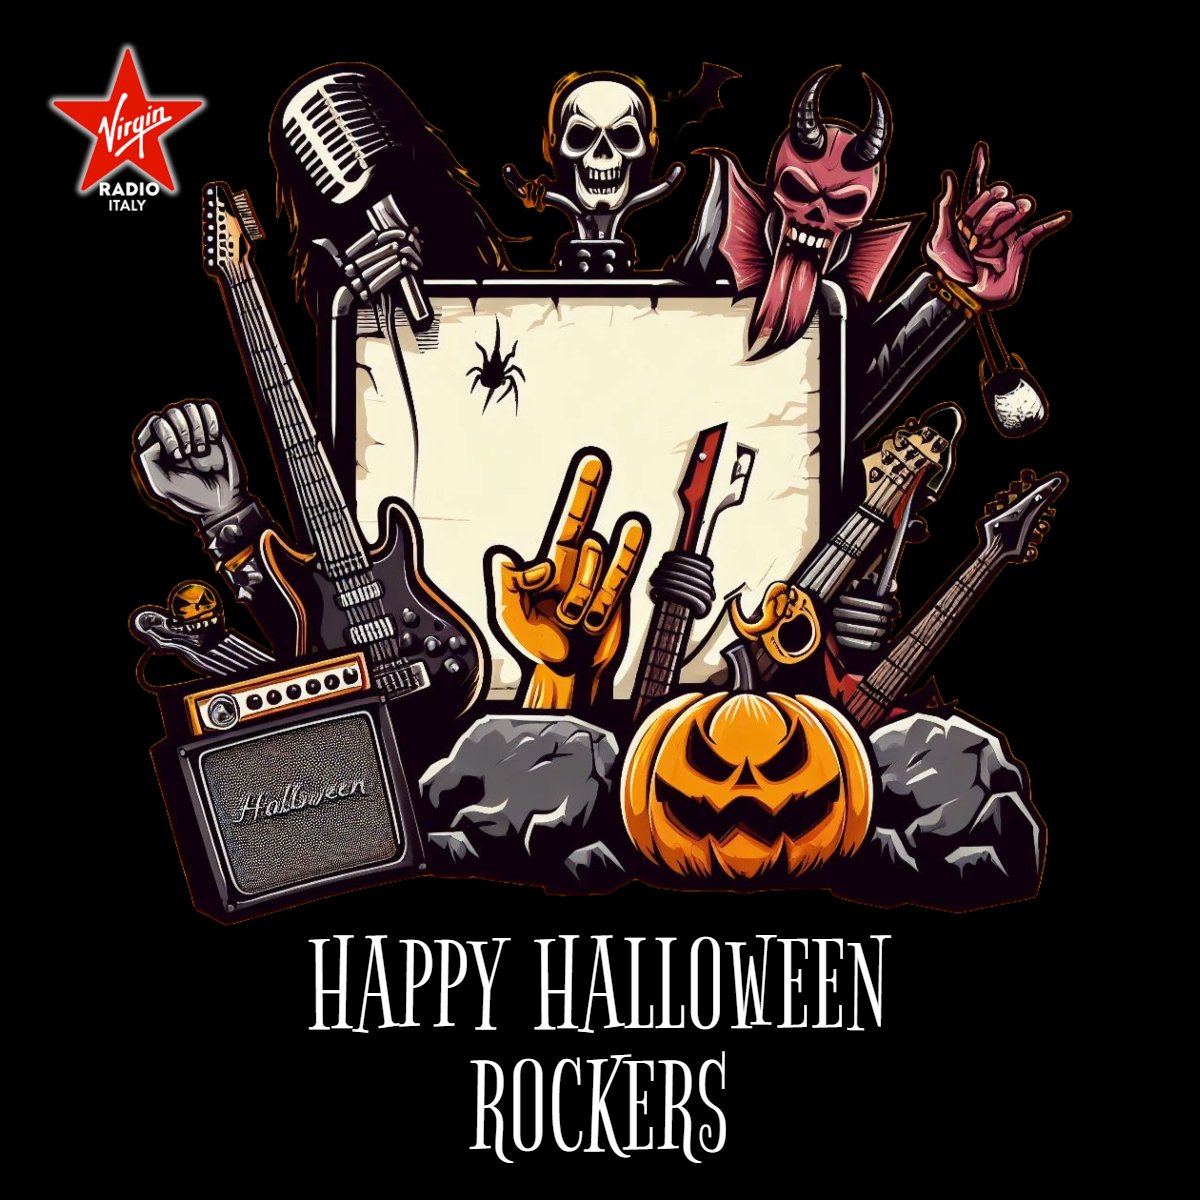 Happy #HALLOWEEN Rockers! 🤘🎃🦇

#StayRock #VirginRadio #StyleRock